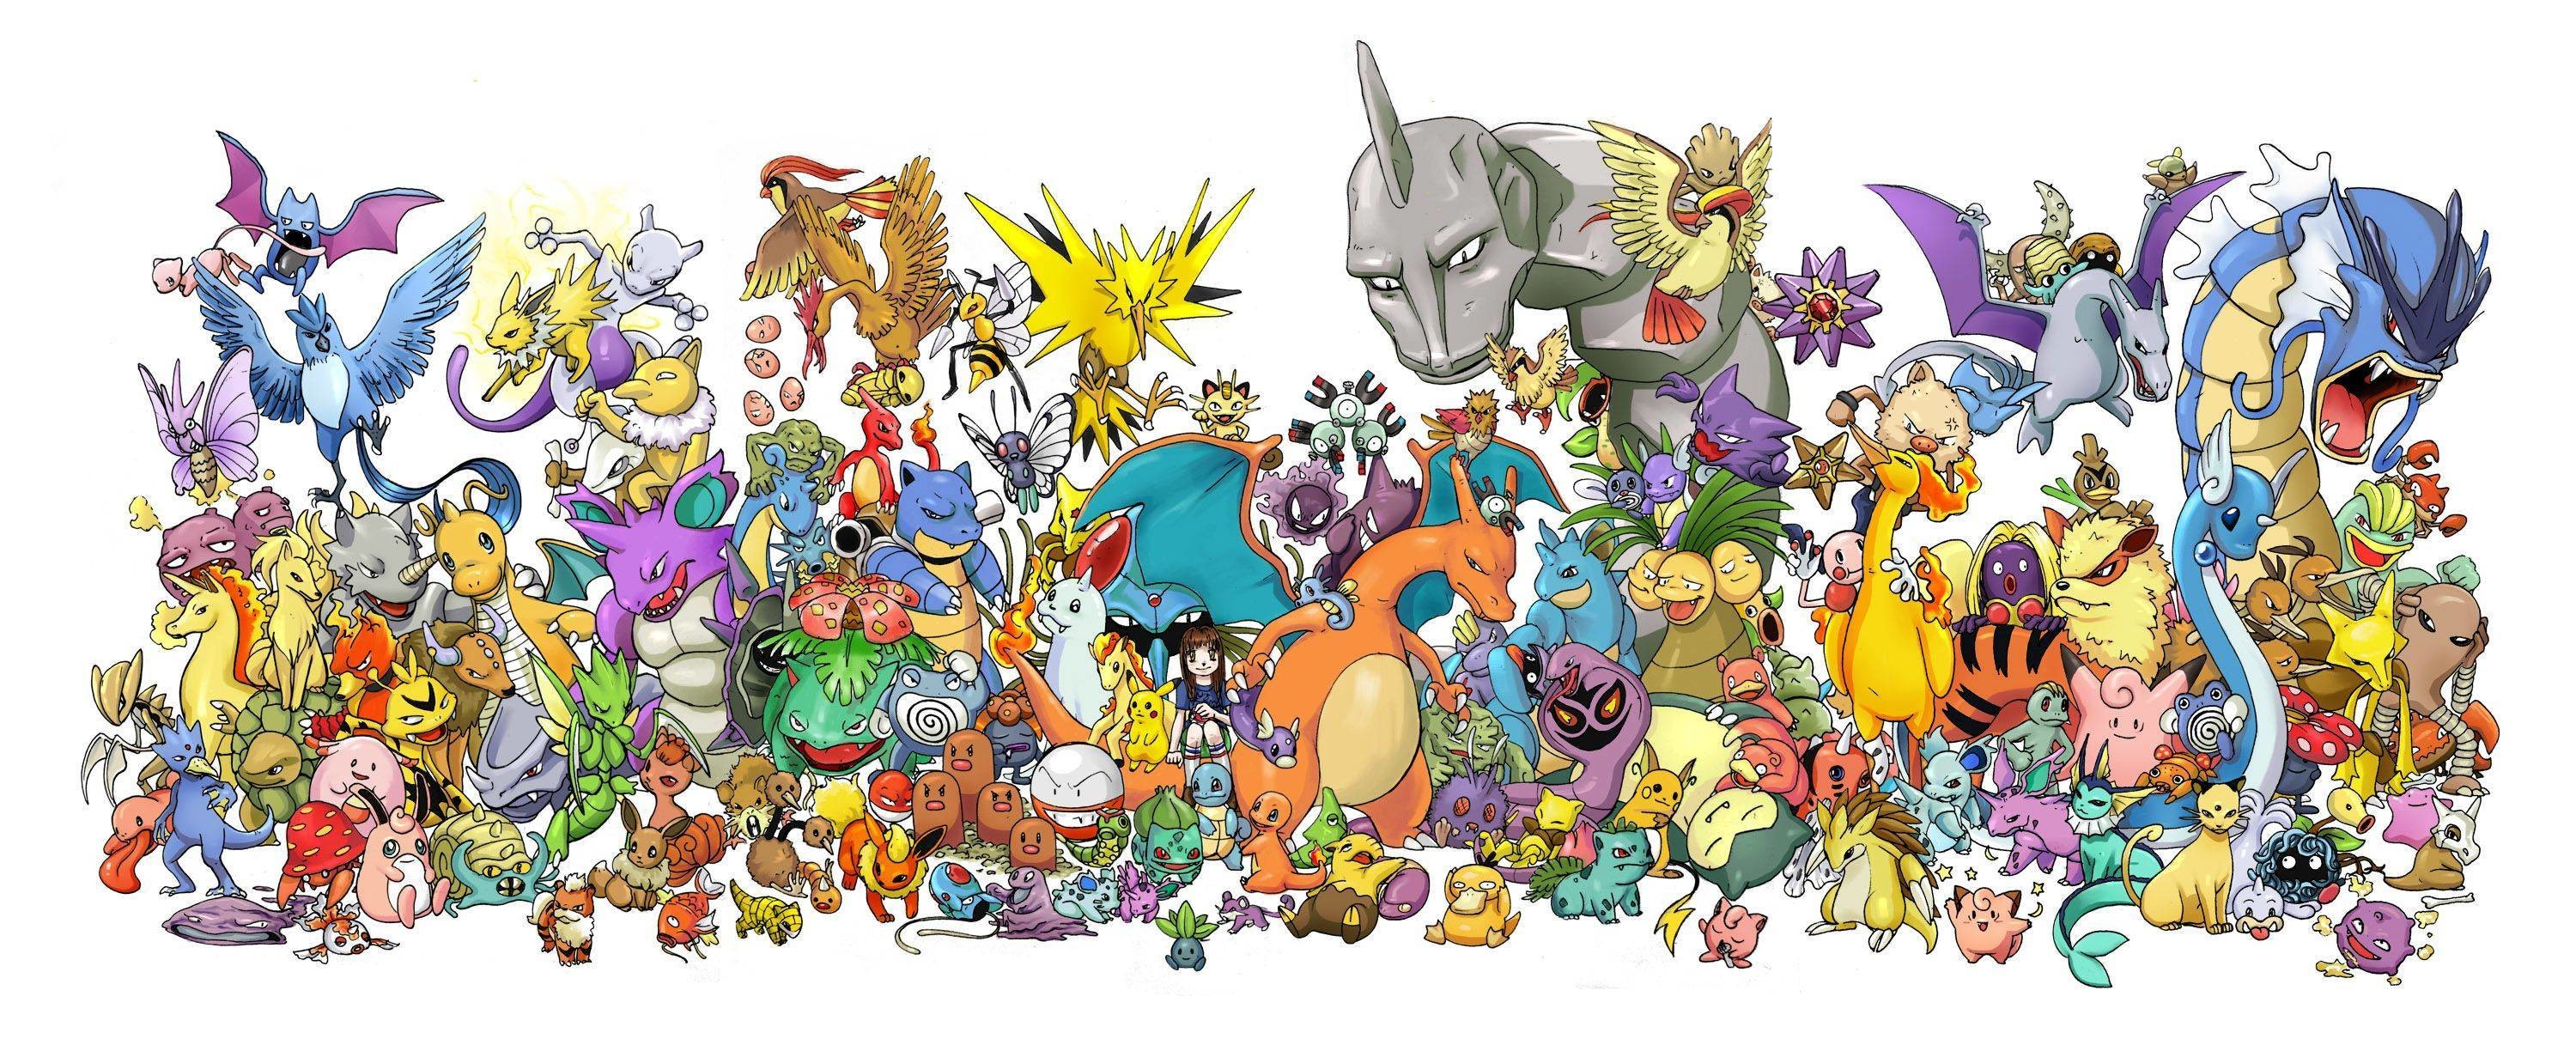 Original Pokemon Wallpaper Image